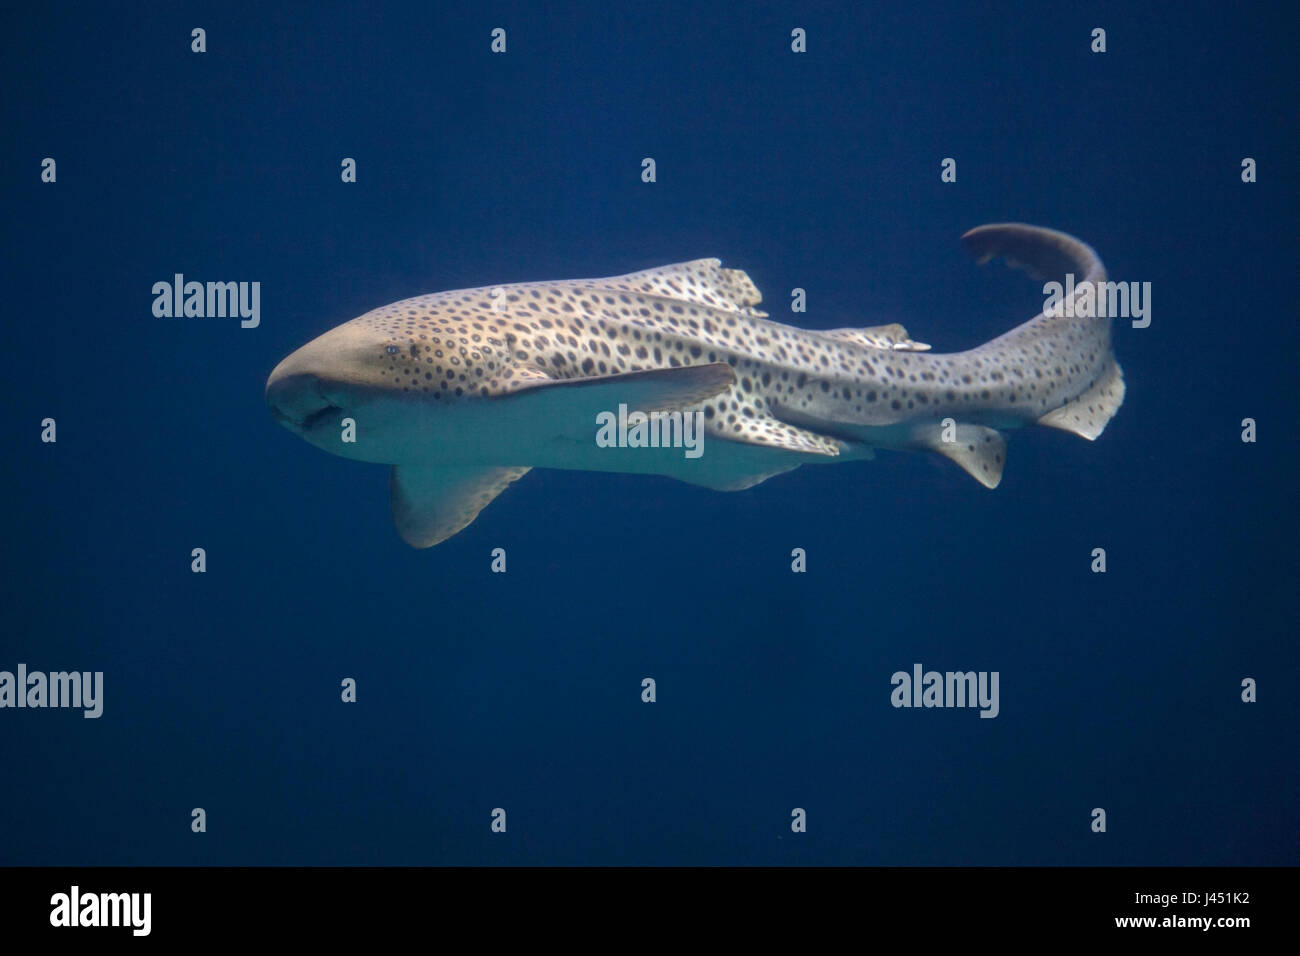 zebra shark in blue water Stock Photo